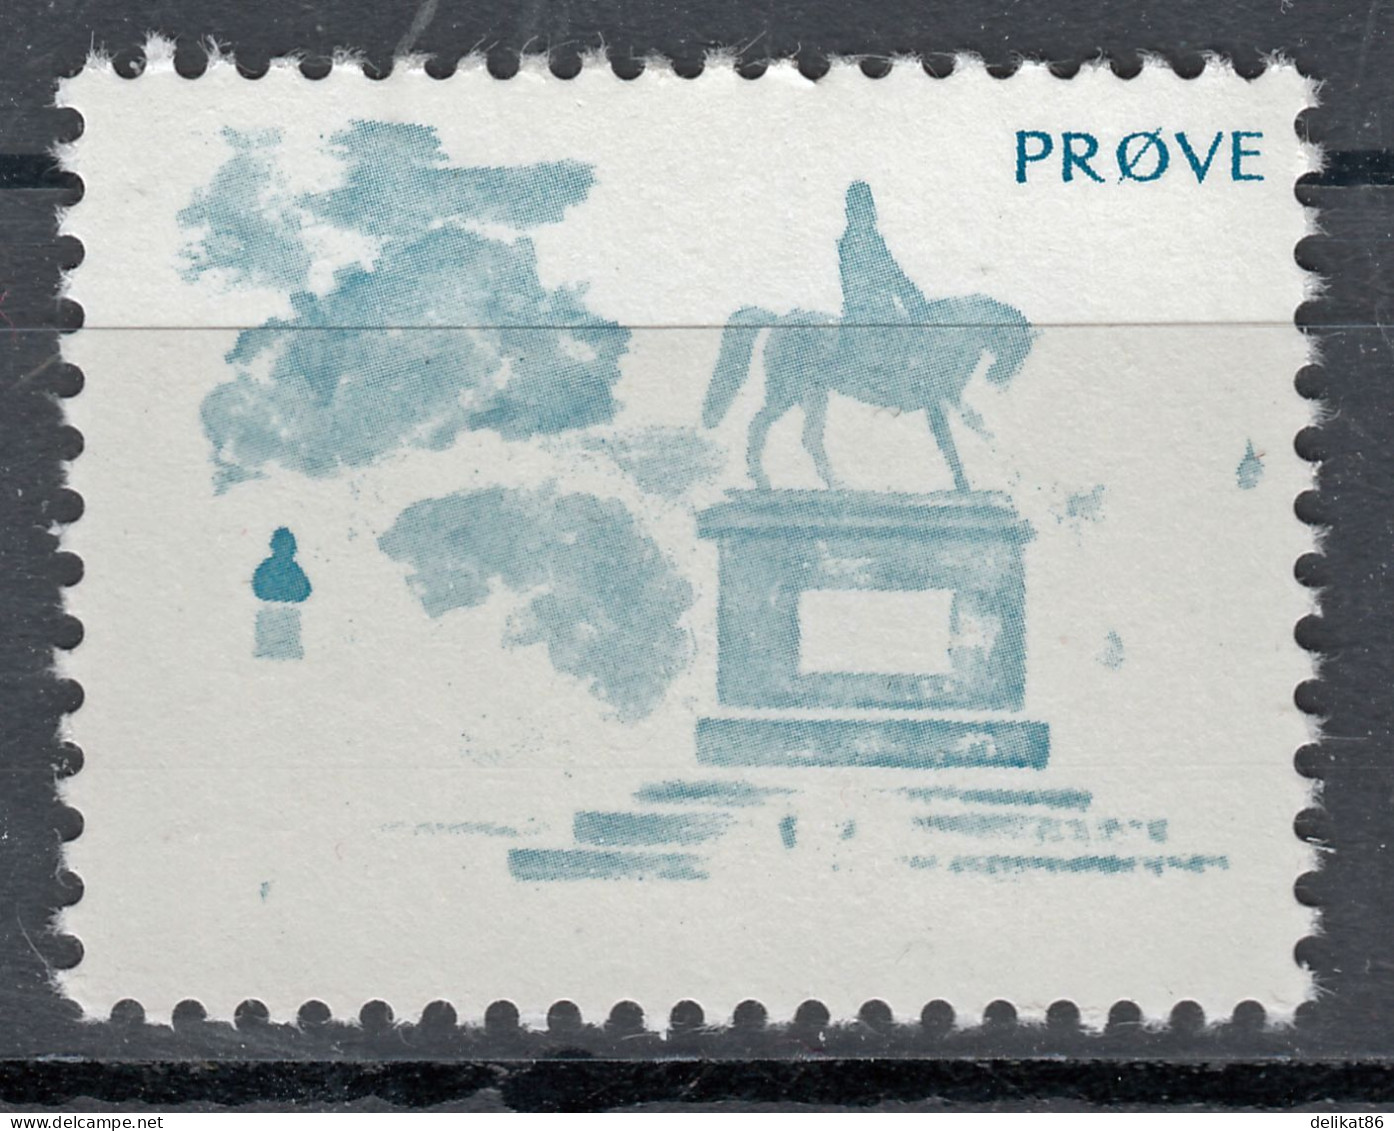 Test Stamp, Specimen, Prove, Probedruck, Reiterstandbild, Slania 1980 - 1985 - Ensayos & Reimpresiones